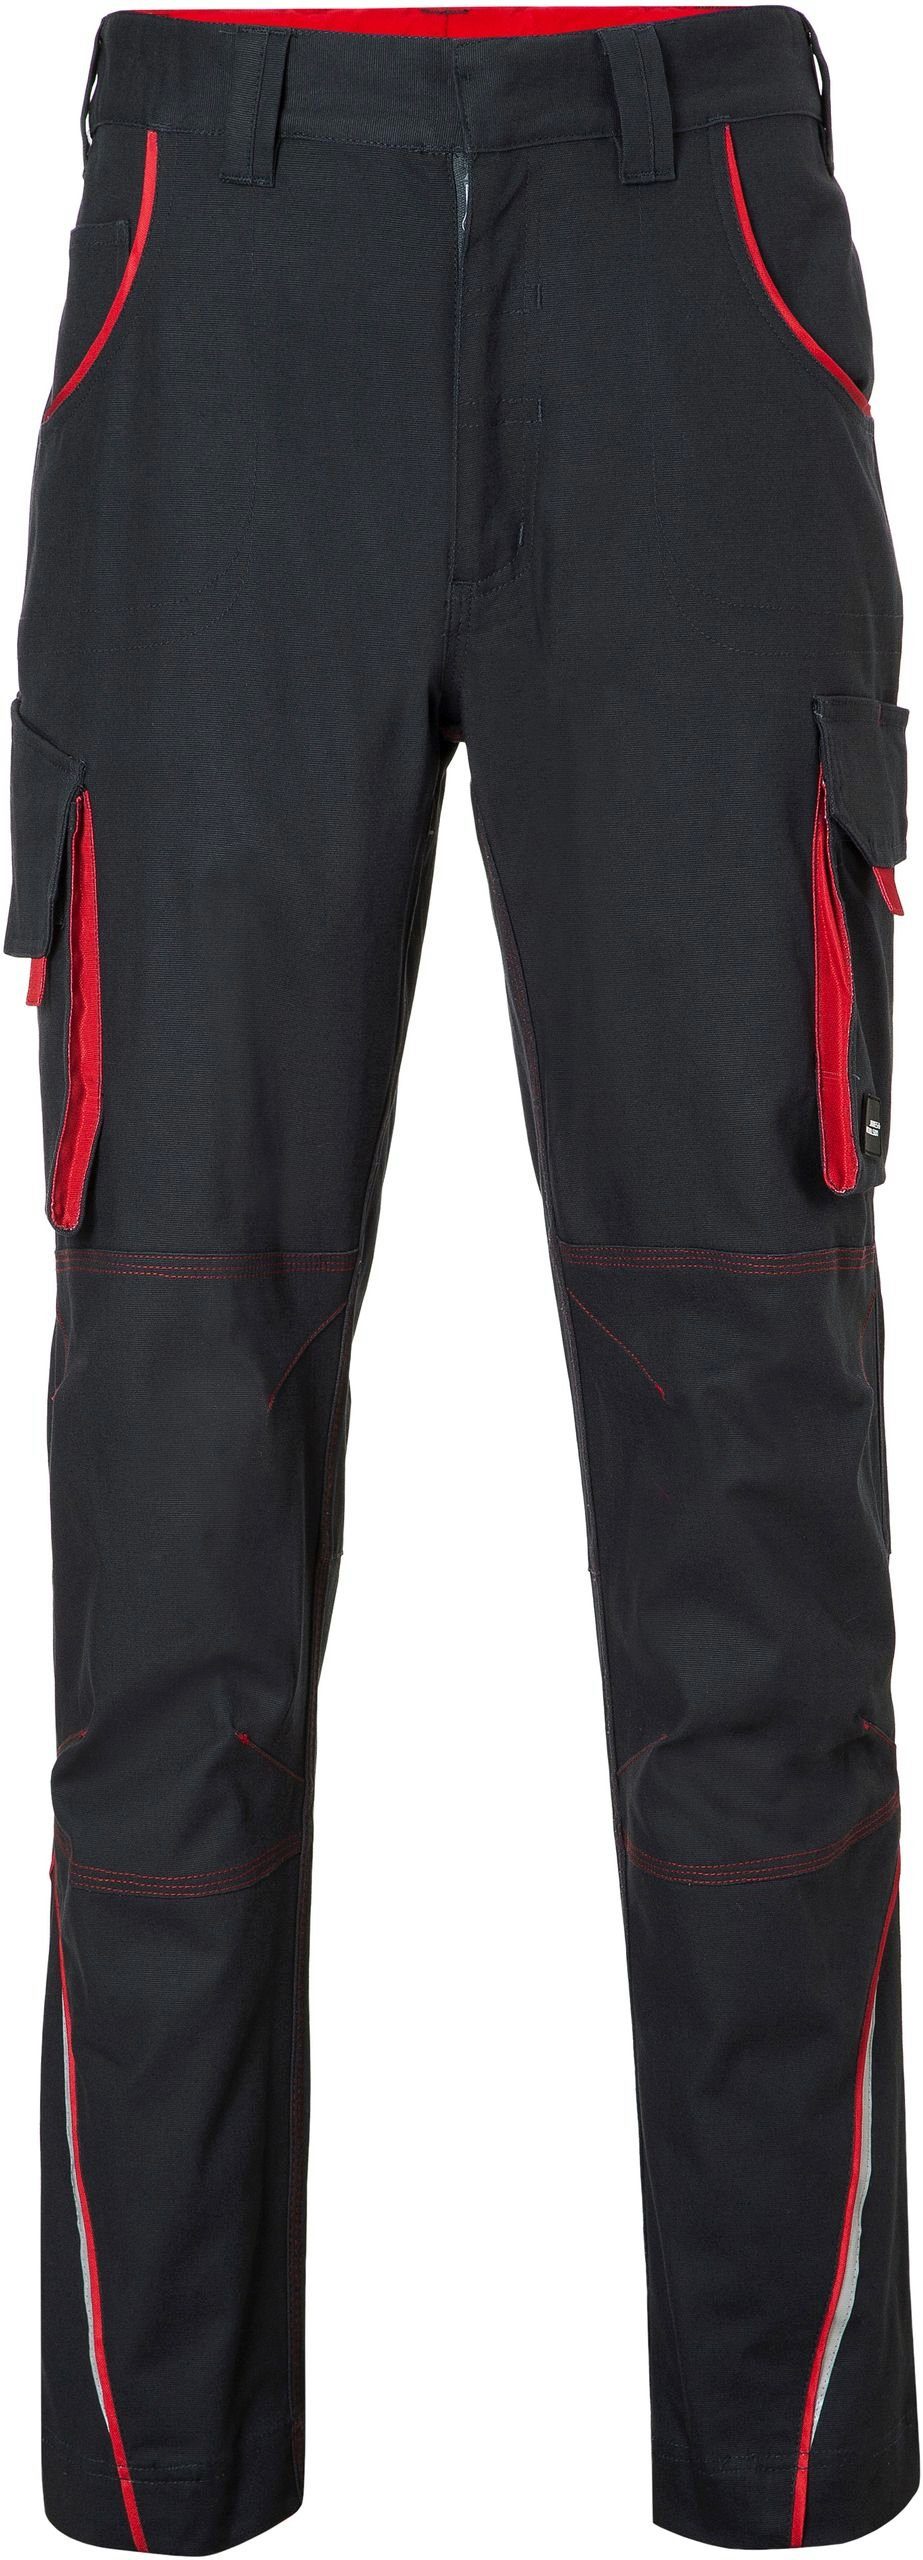 Arbeitshose & carbon/red Hose FaS50847 Workwear James Nicholson